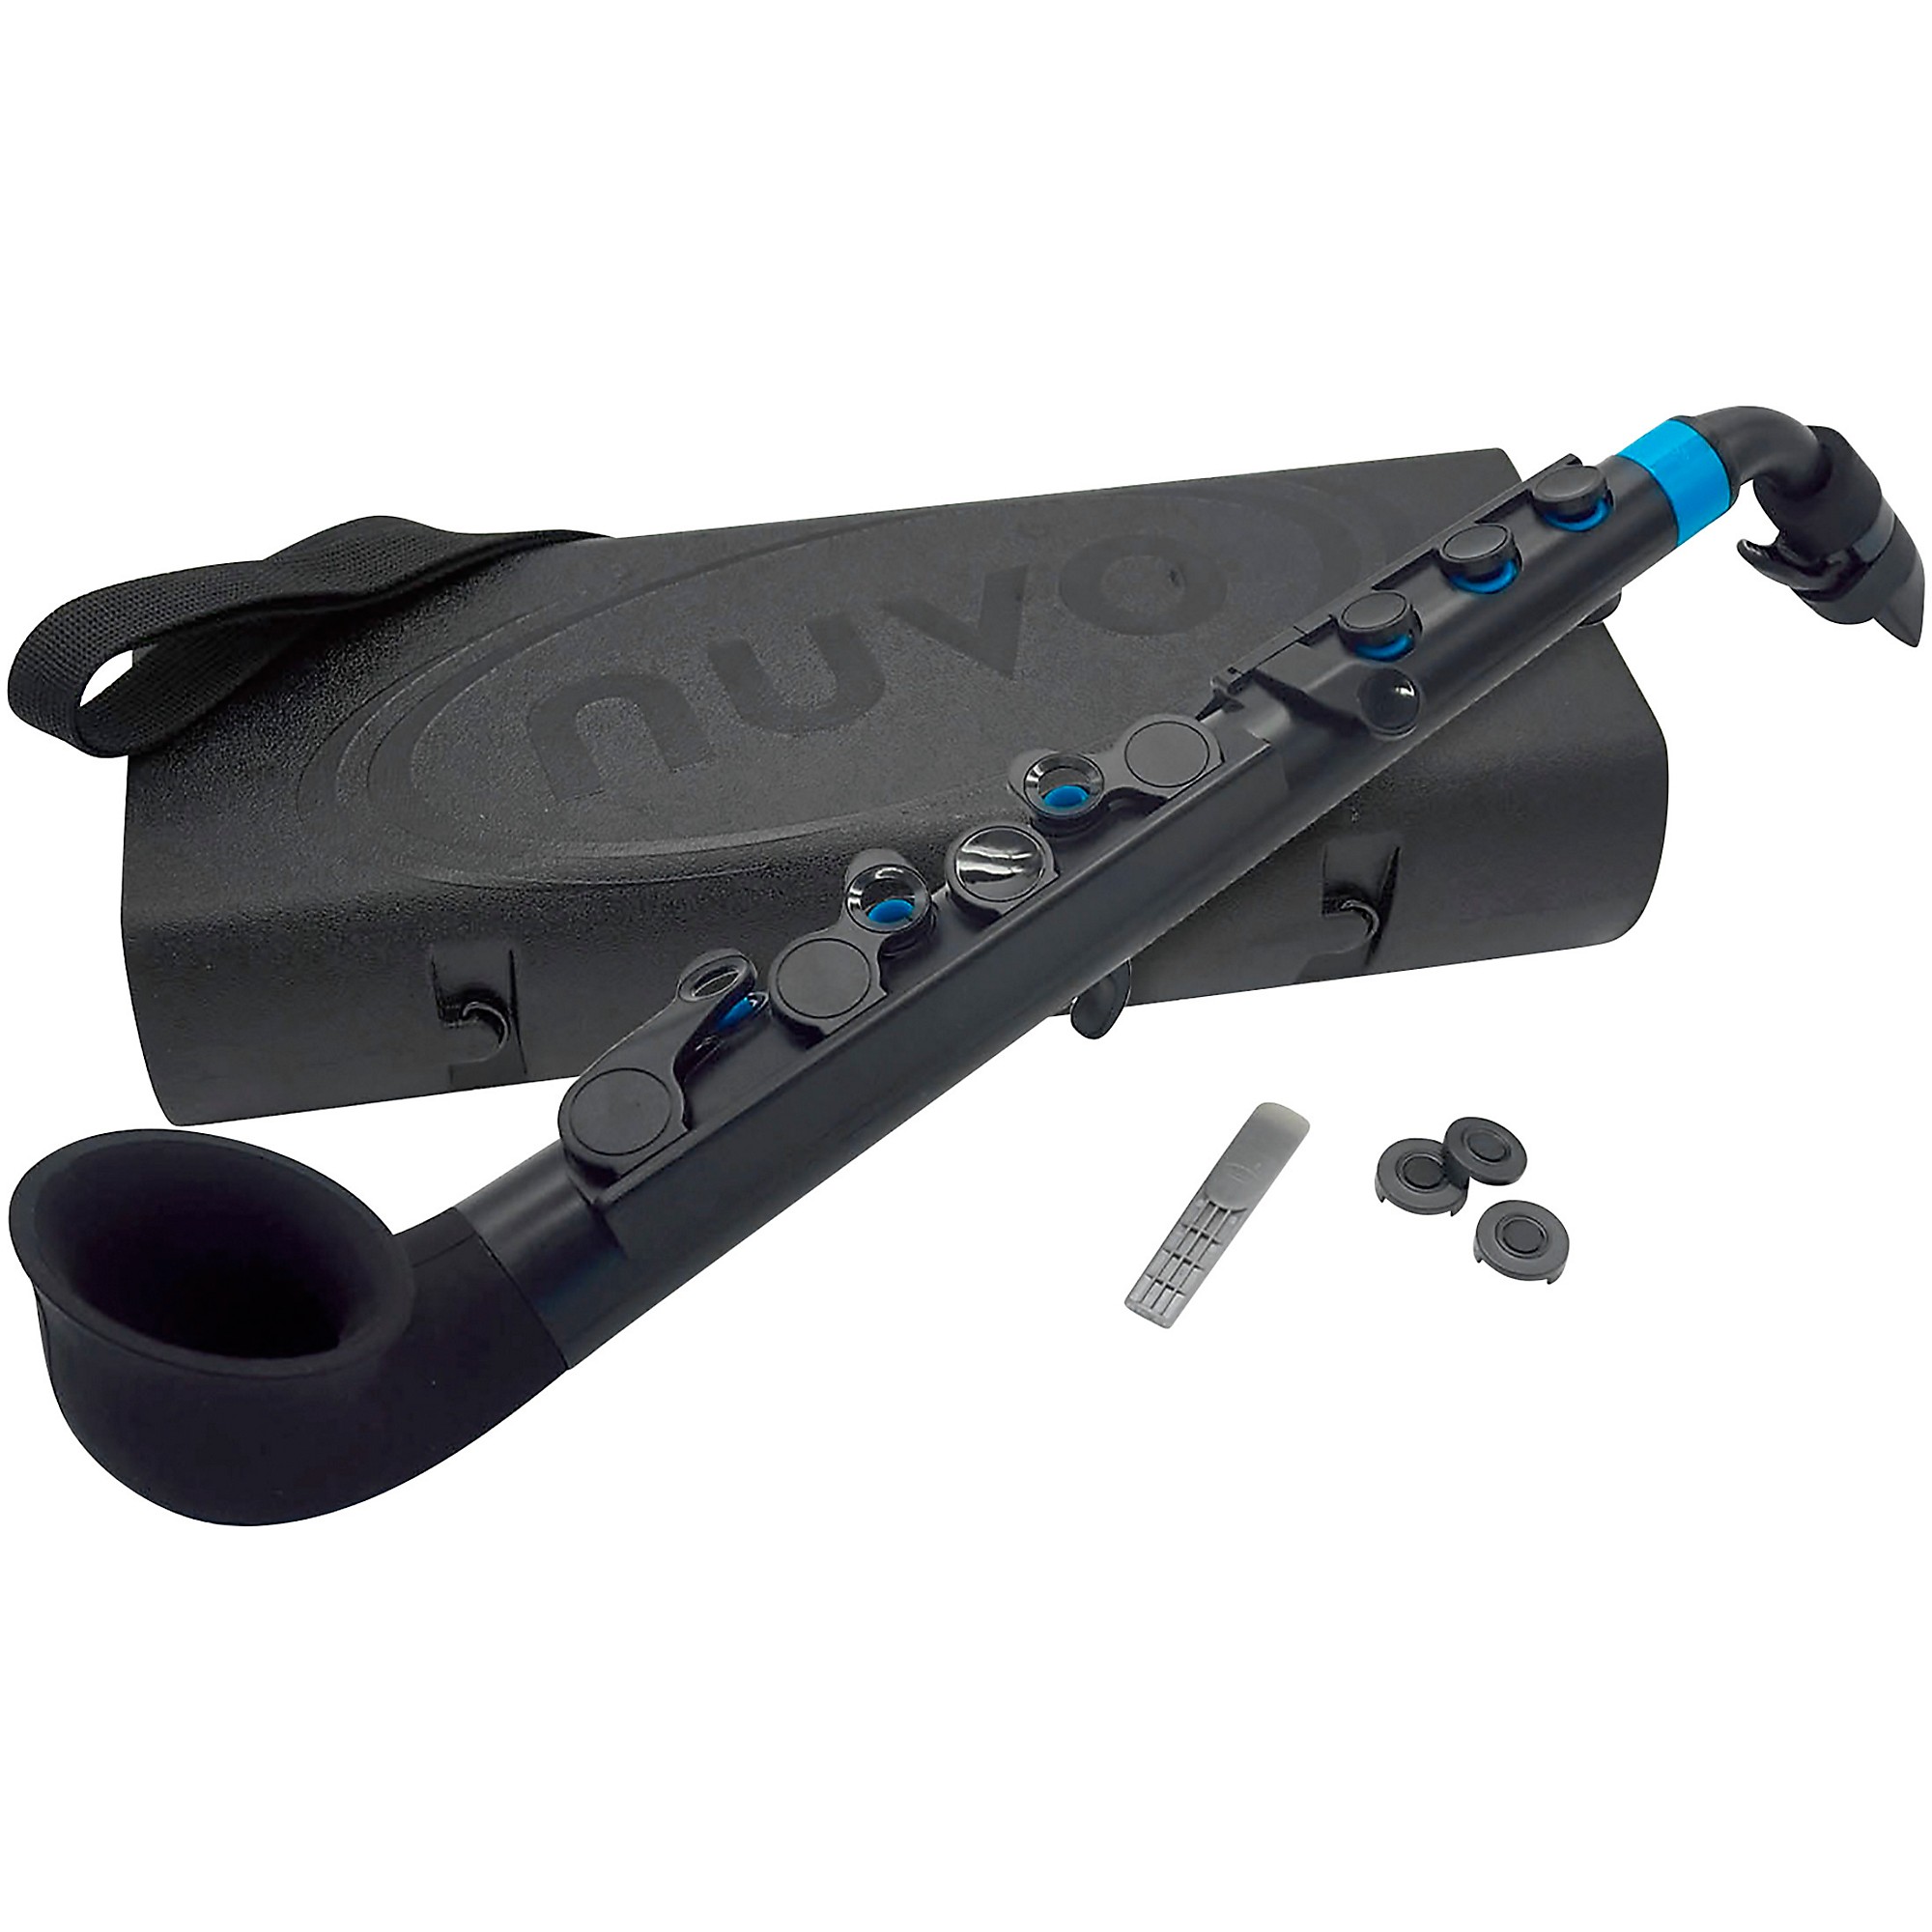 Nuvo jSax 2.0 Plastic Saxophone Black/Blue | Guitar Center